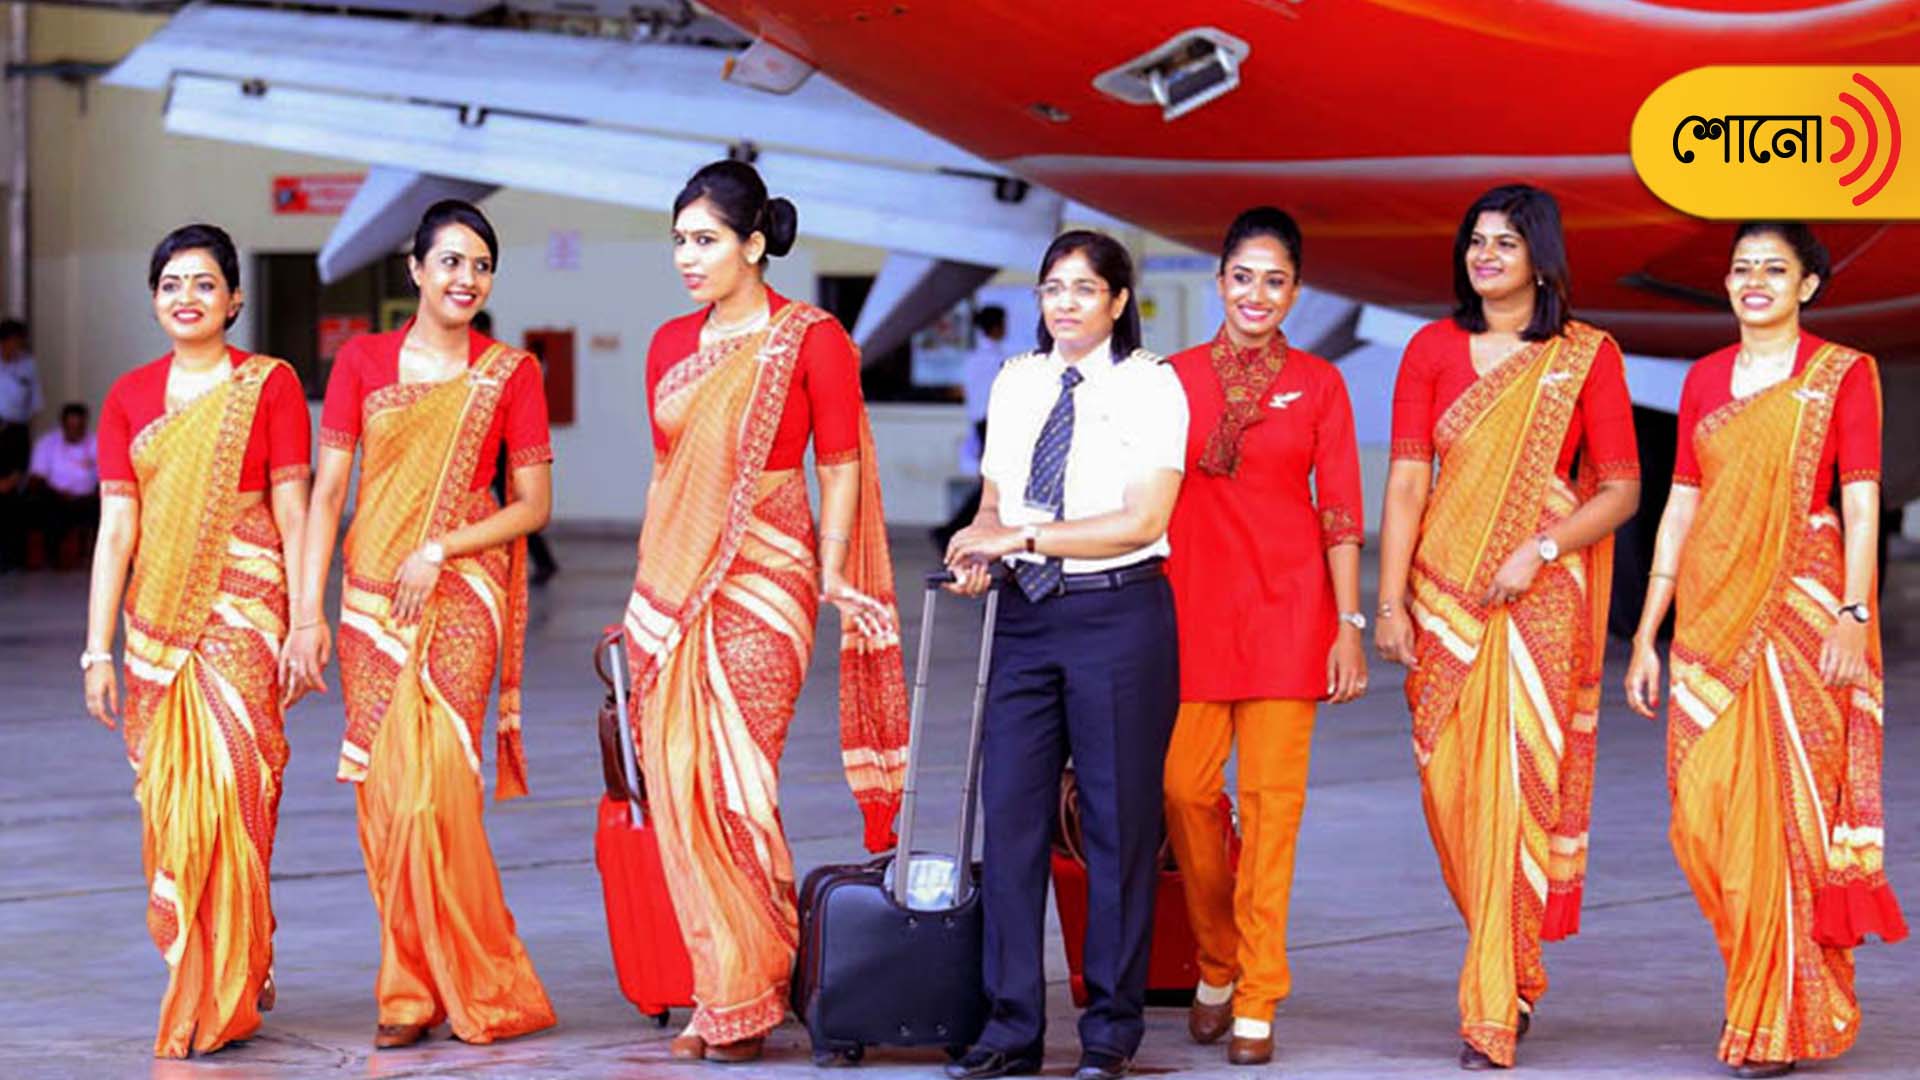 No more sarees, Air India may bring in new look for flight crew